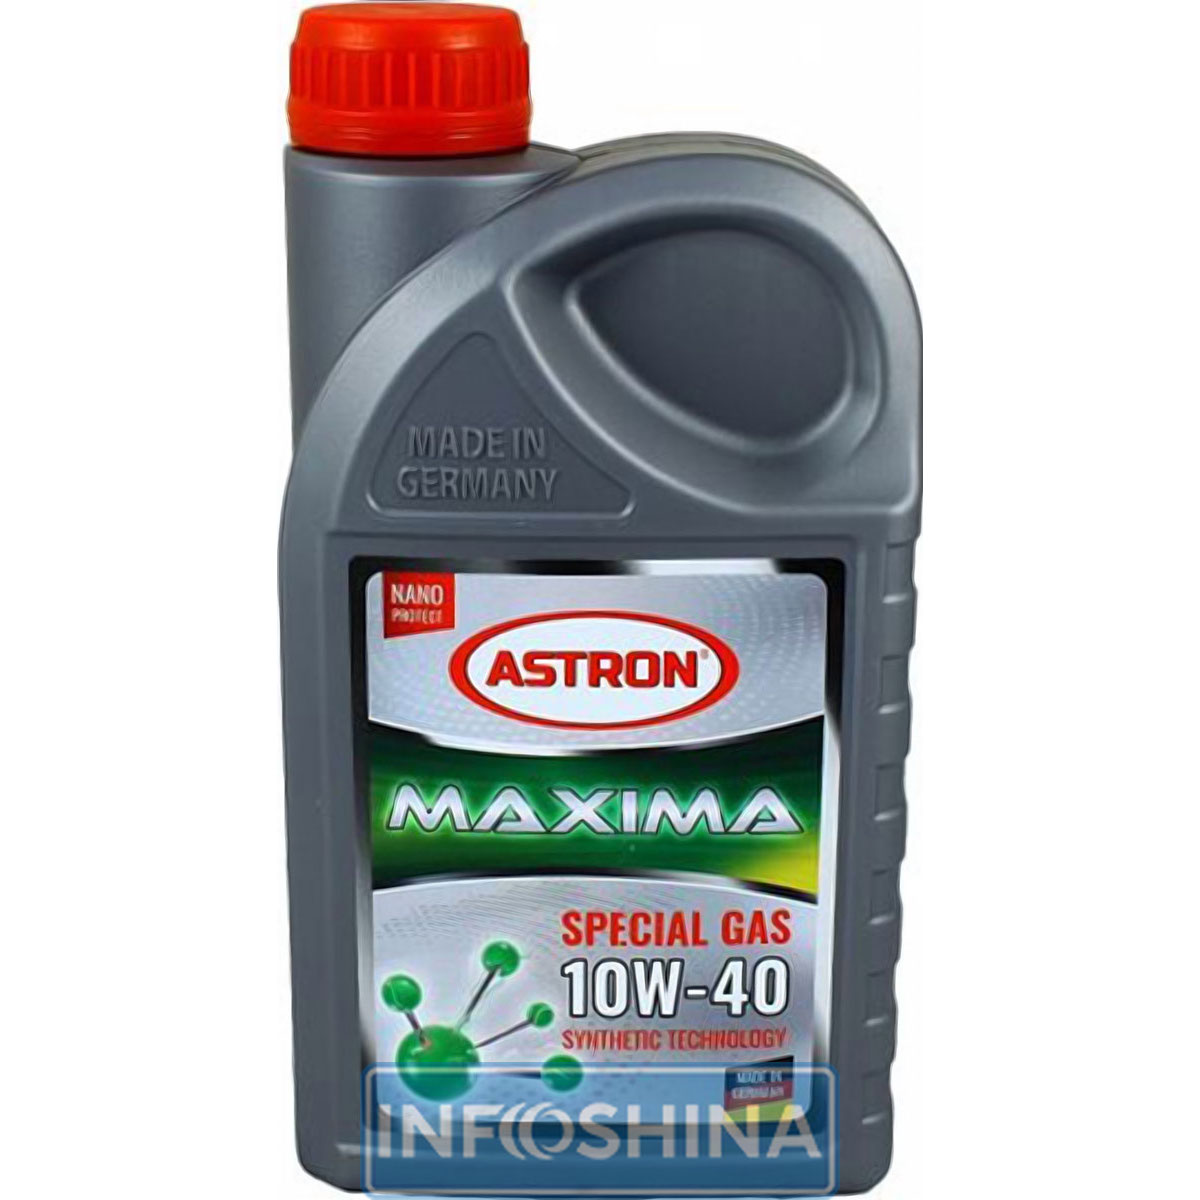 ASTRON Maxima Special GAS 10W-40